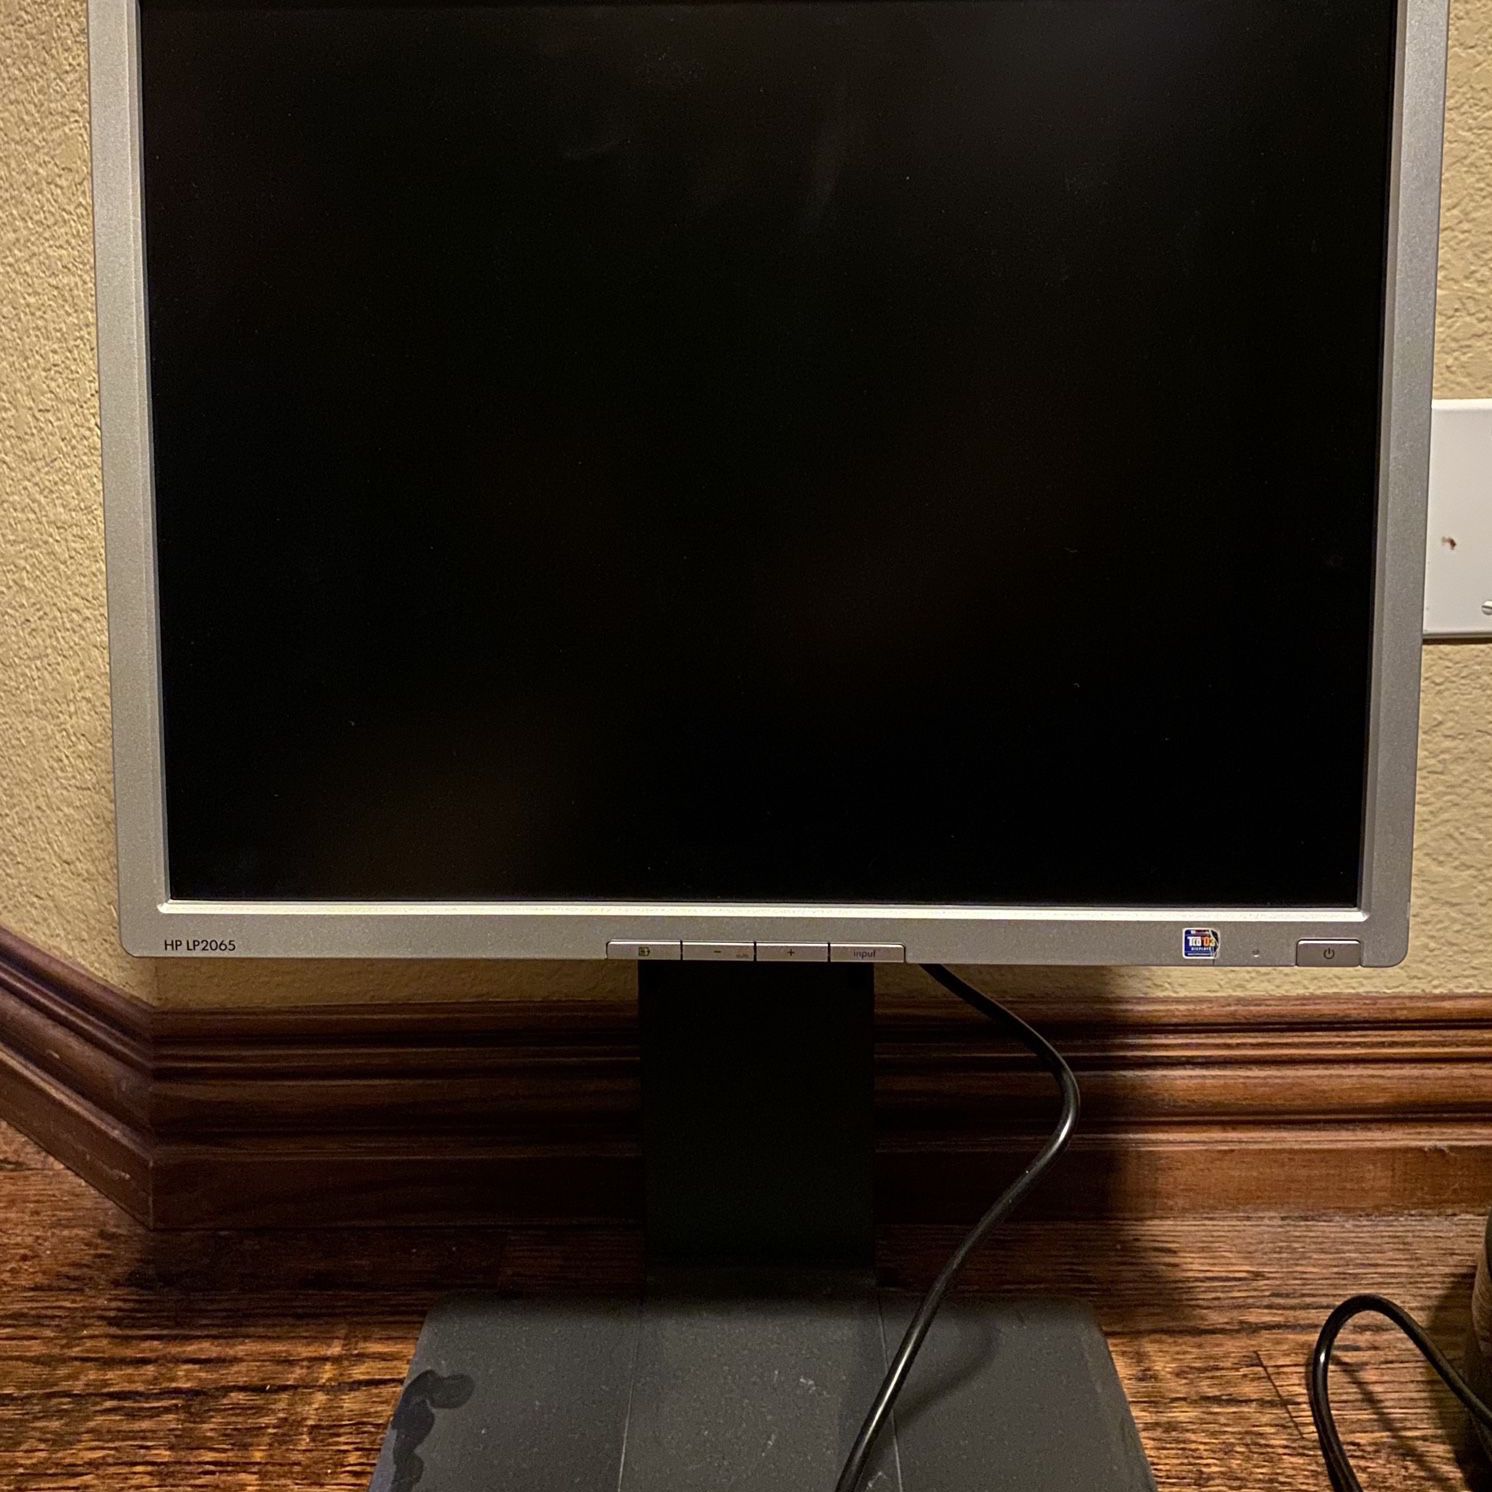 HP LP2065 1600 x 1200 Resolution 20" LCD Flat Panel Computer Monitor Display